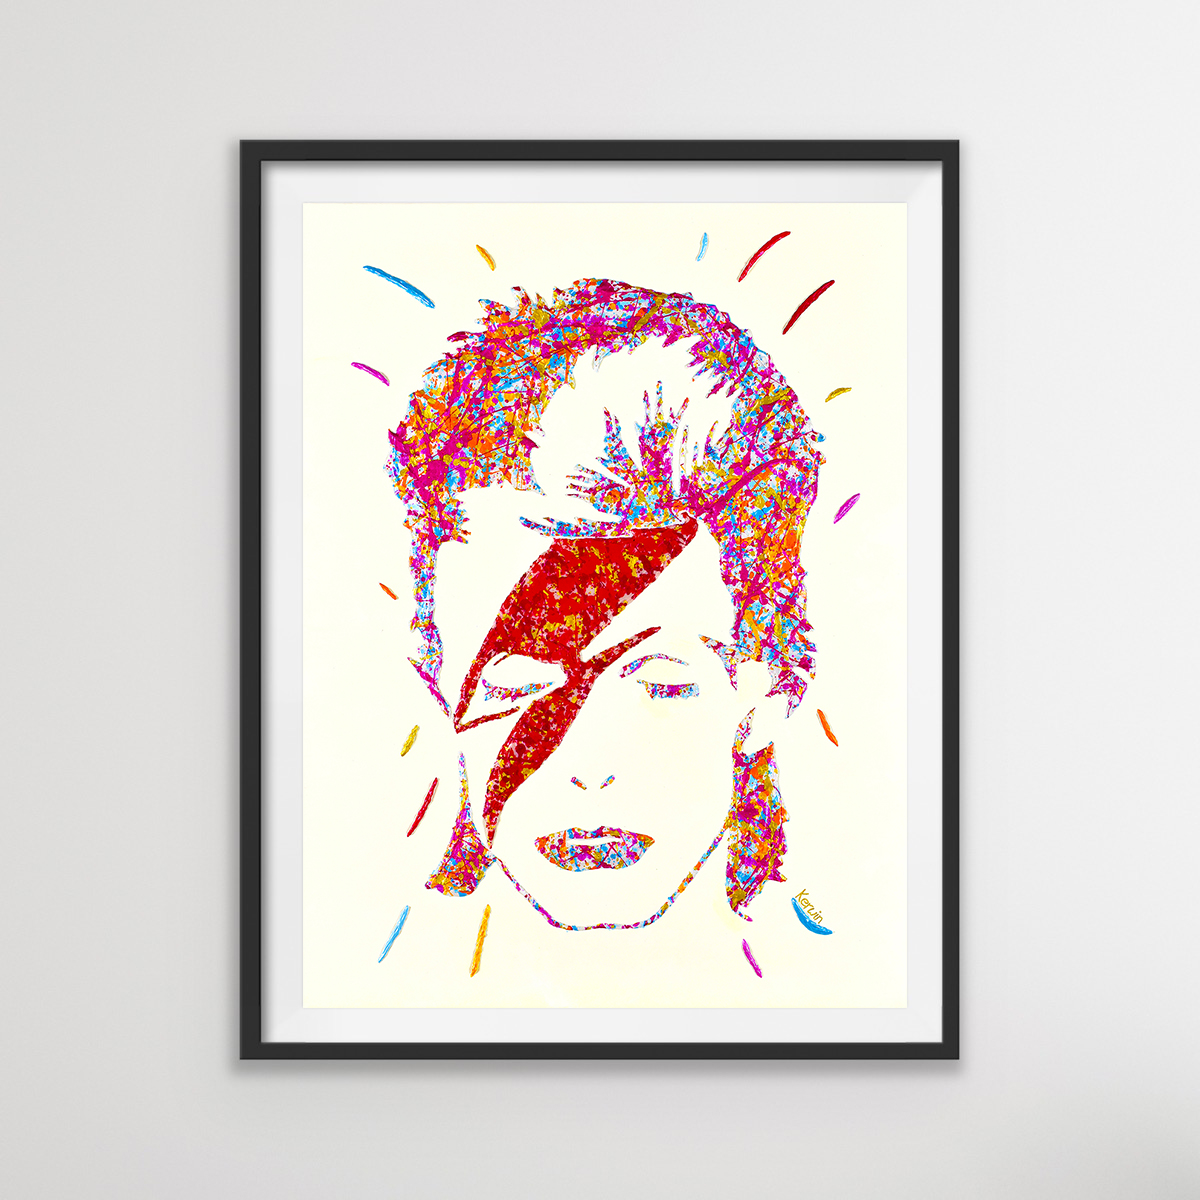 David Bowie | By Kerwin pop art painting prints